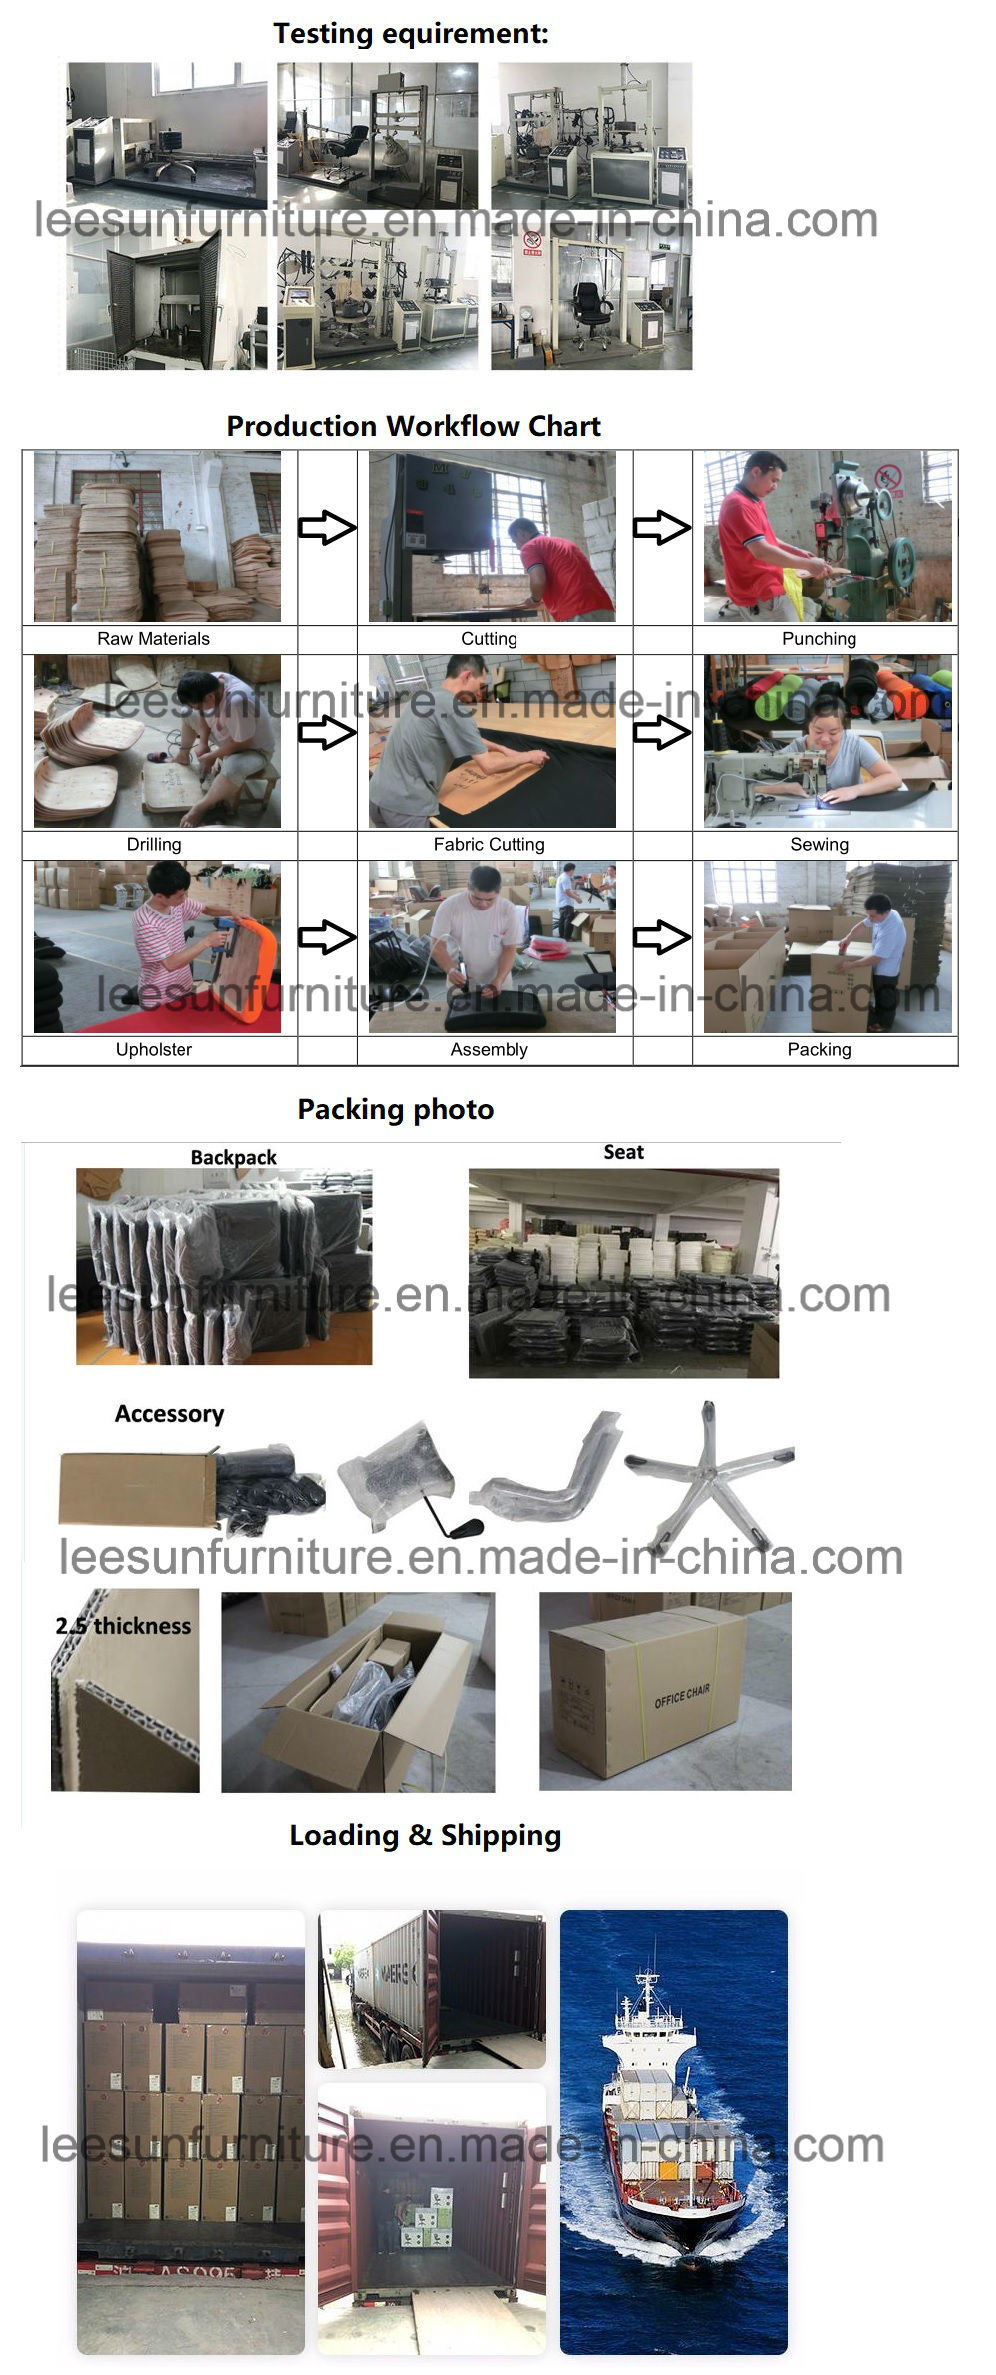 Comfortable Child Home Computer Desk Mesh Chair Without Armrest (LS-15GR)